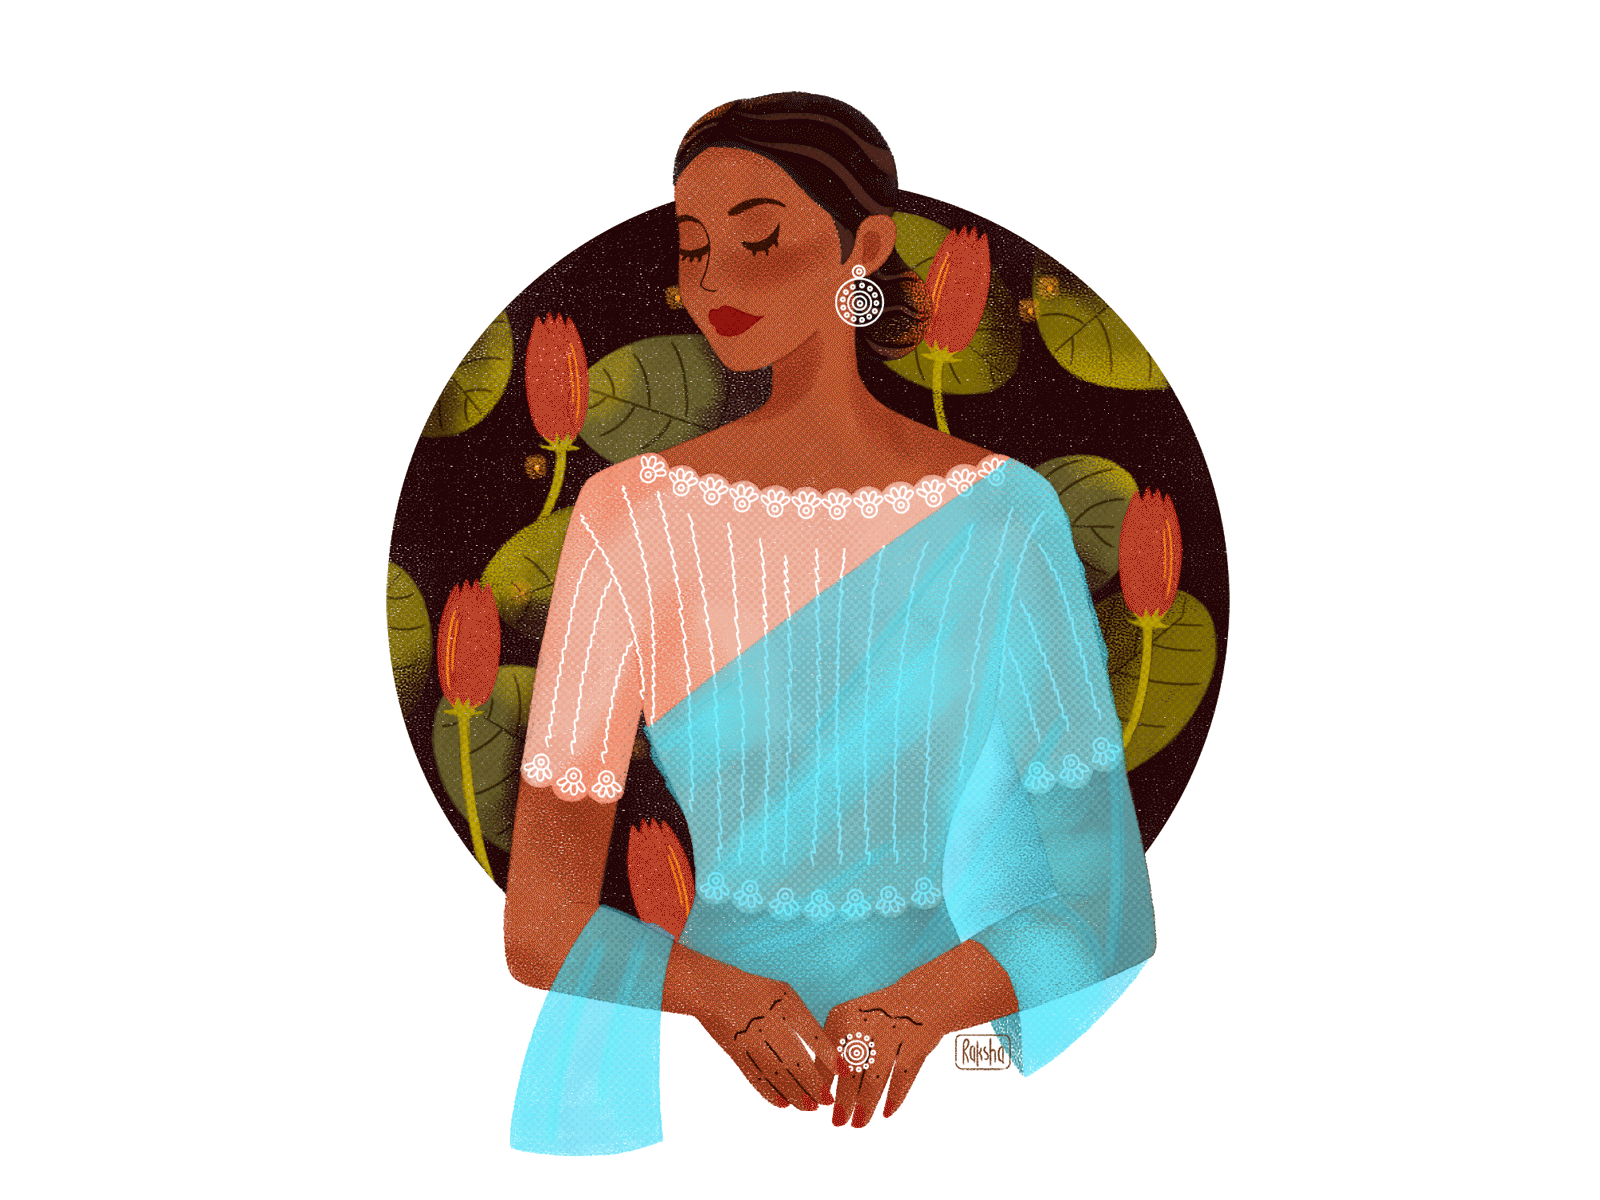 Lady in saree